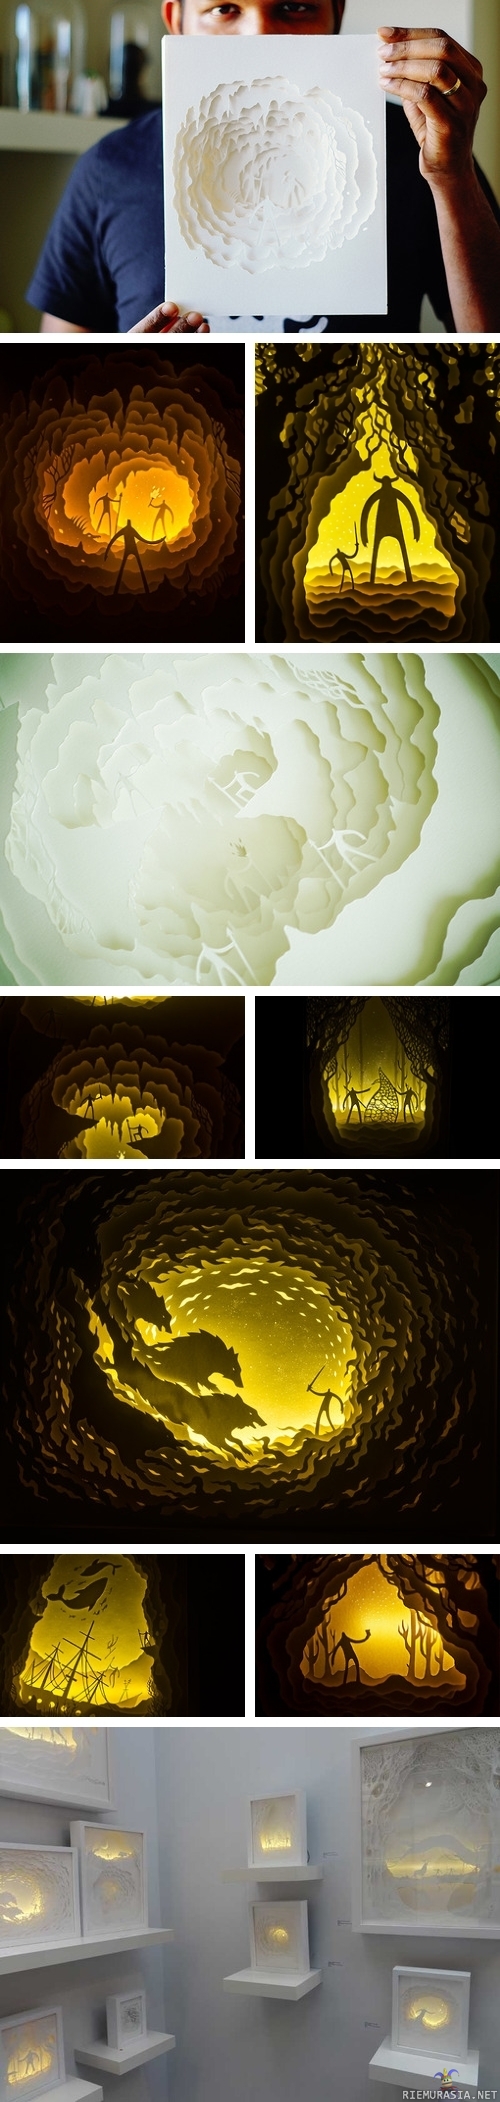 Illuminated Cut Paper Light-boxes - by Hari & Deepti. More information: http://www.theblackbookgallery.com/artists/hari-deepti/